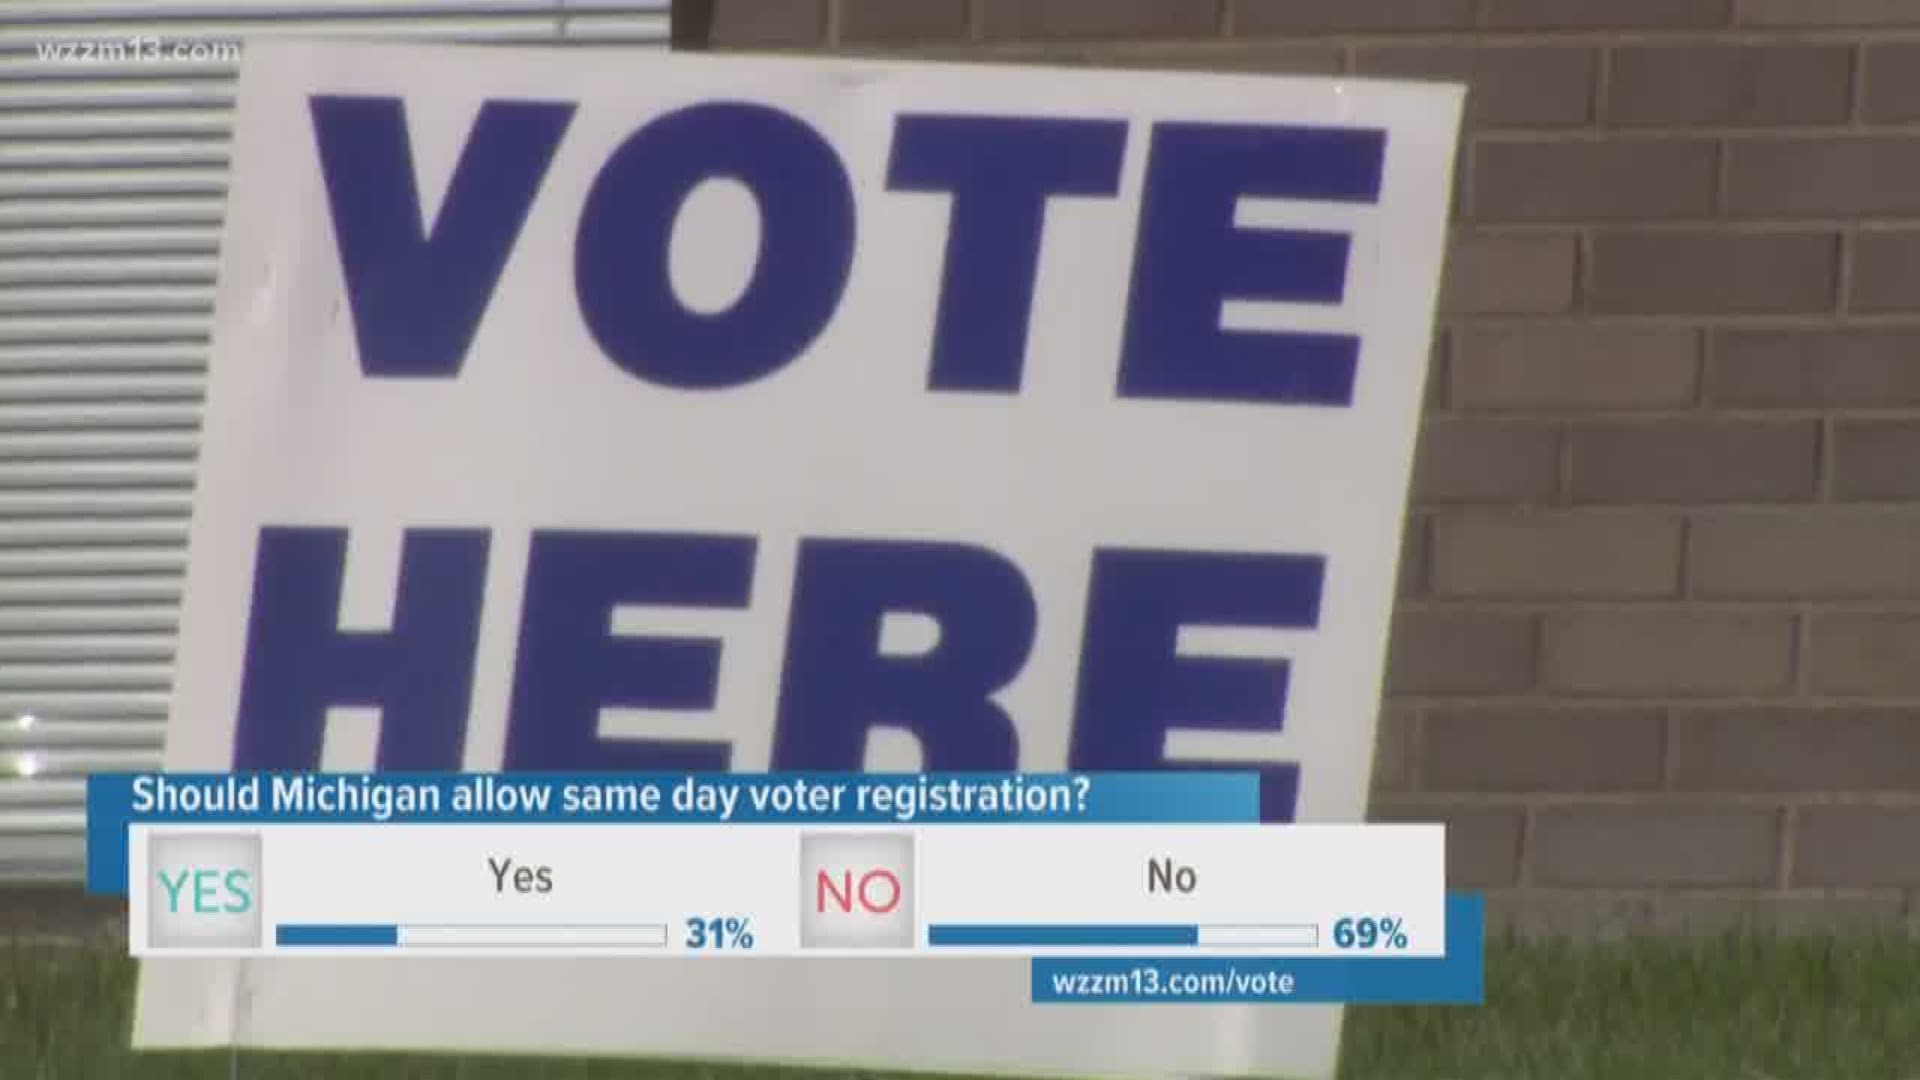 Should Michigan allow same day voter registration?